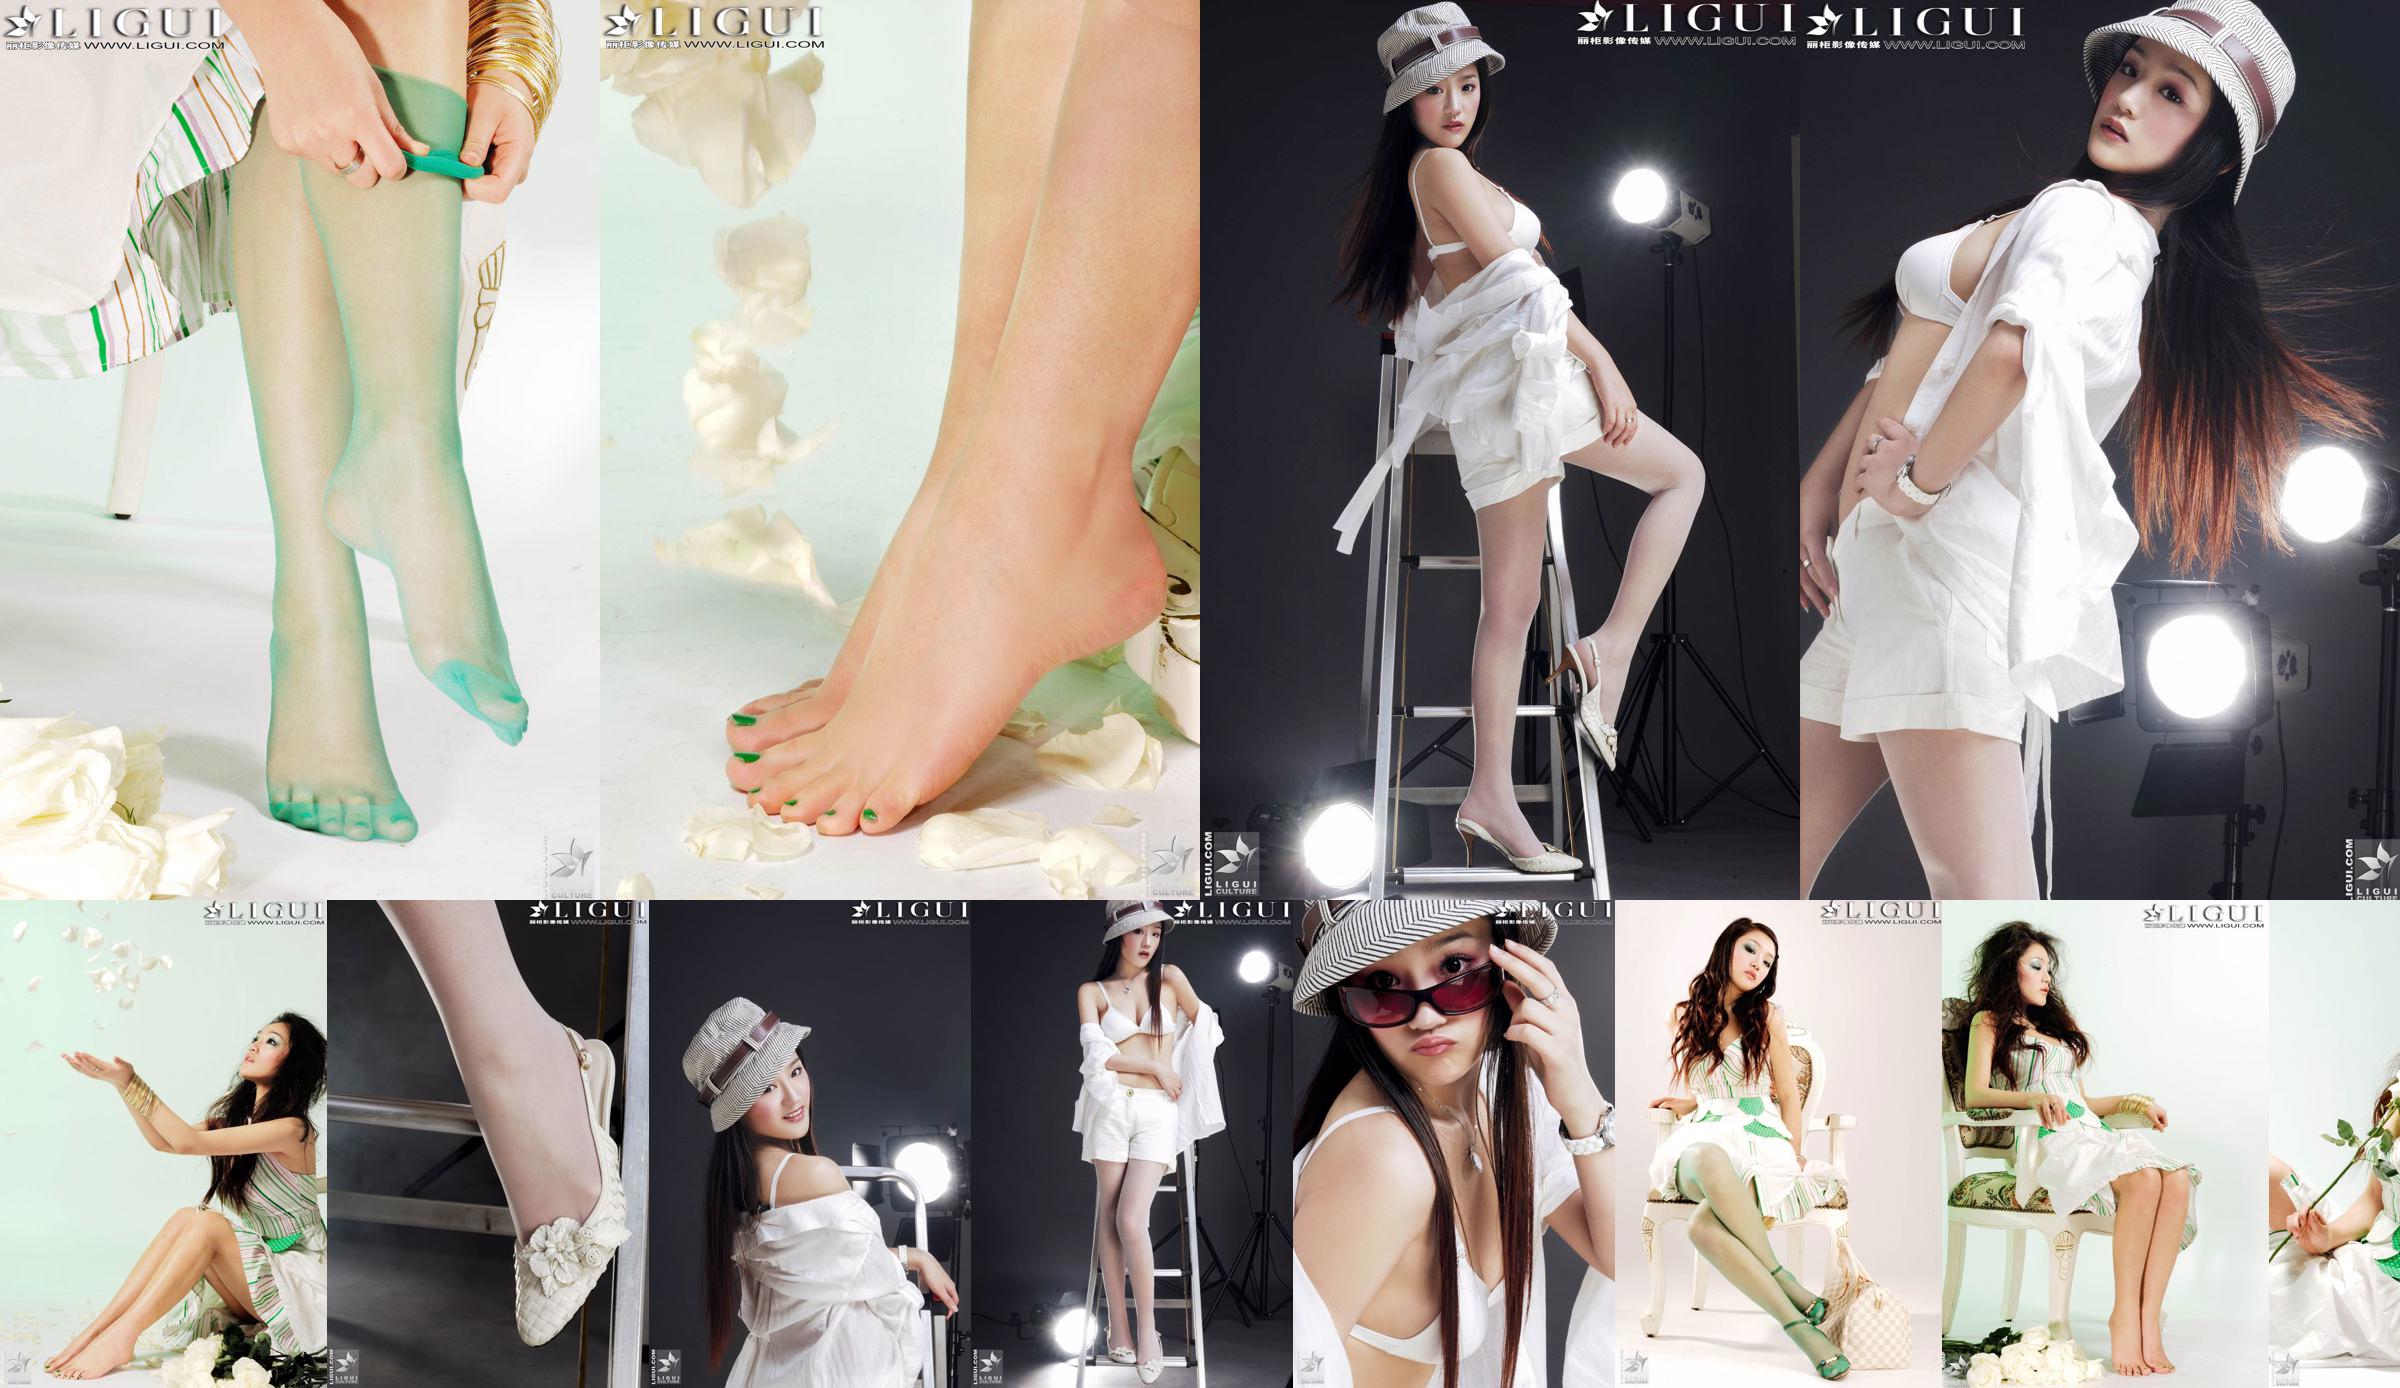 [丽 柜 贵 foot LiGui] Bức ảnh "Chân thời trang" của người mẫu Zhang Jingyan về đôi chân đẹp và đôi chân lụa No.d6886b Trang 13